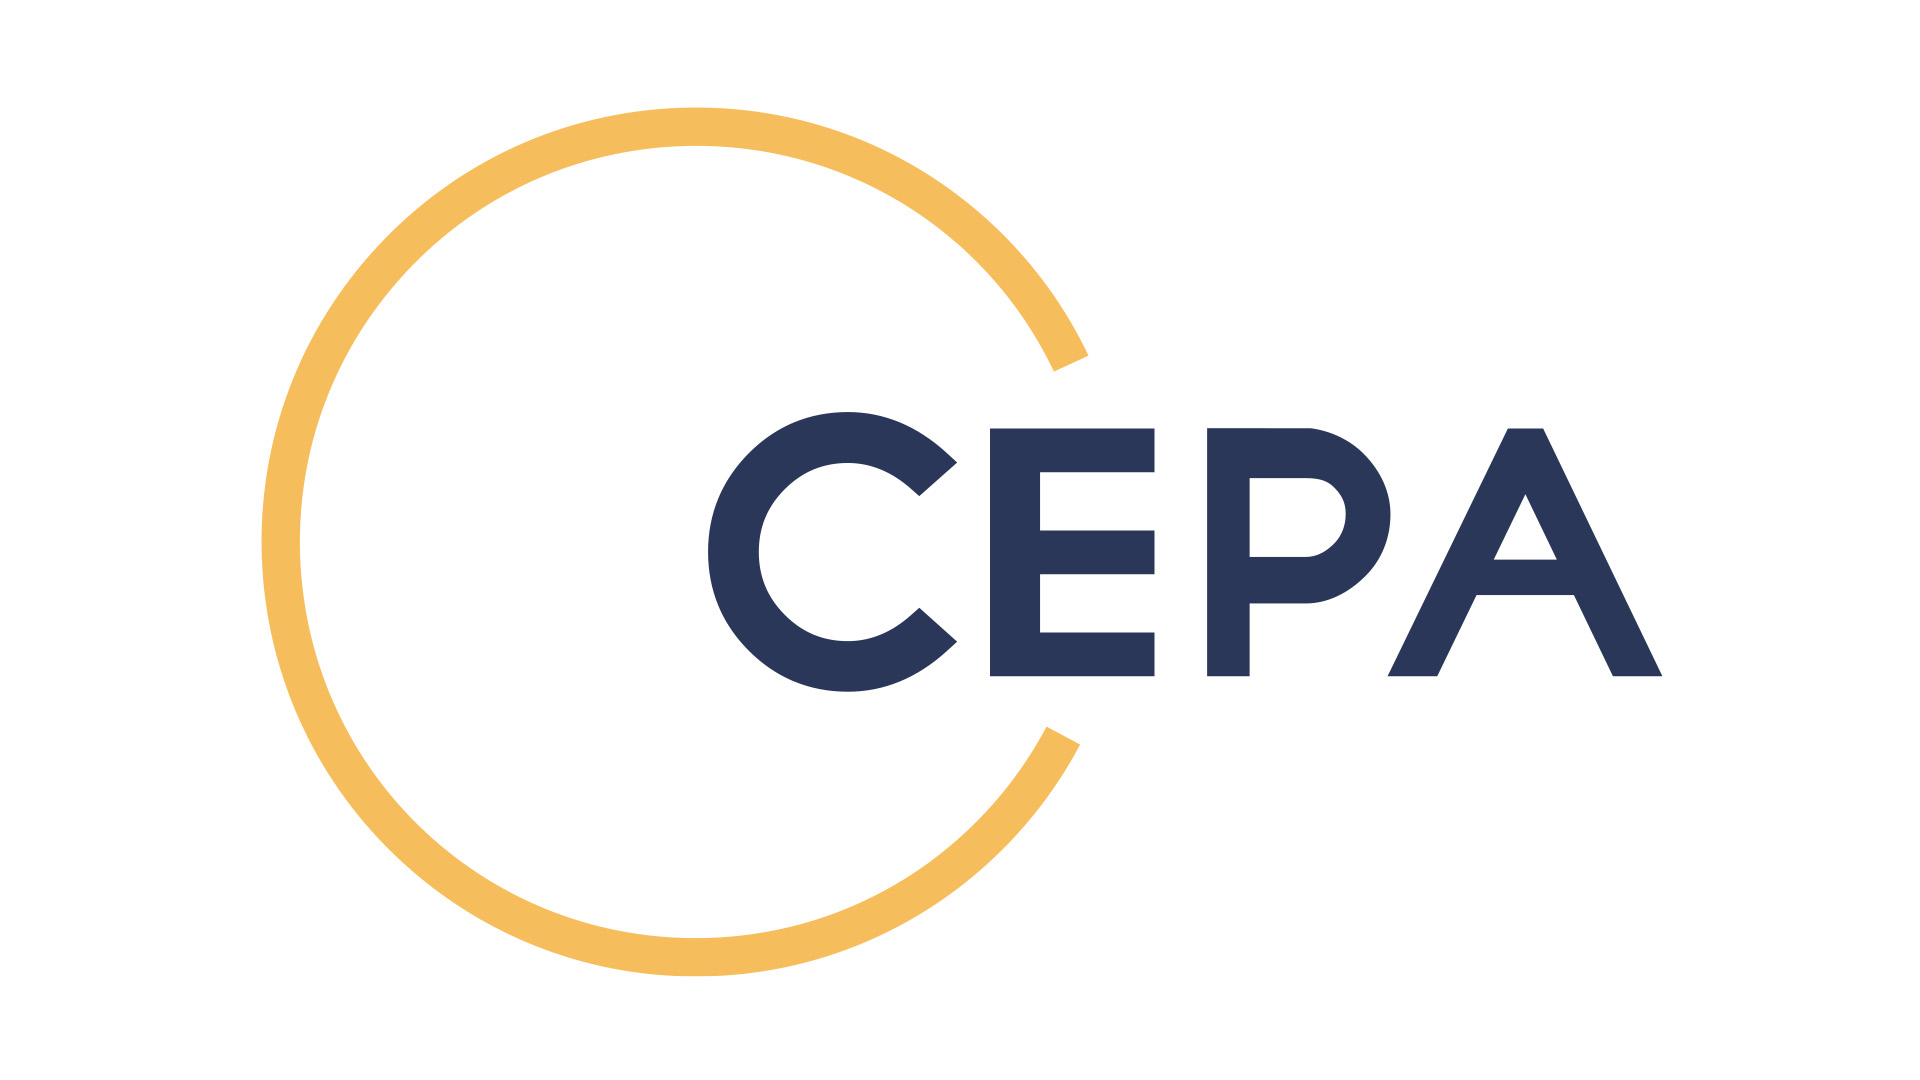 (c) Cepa.org